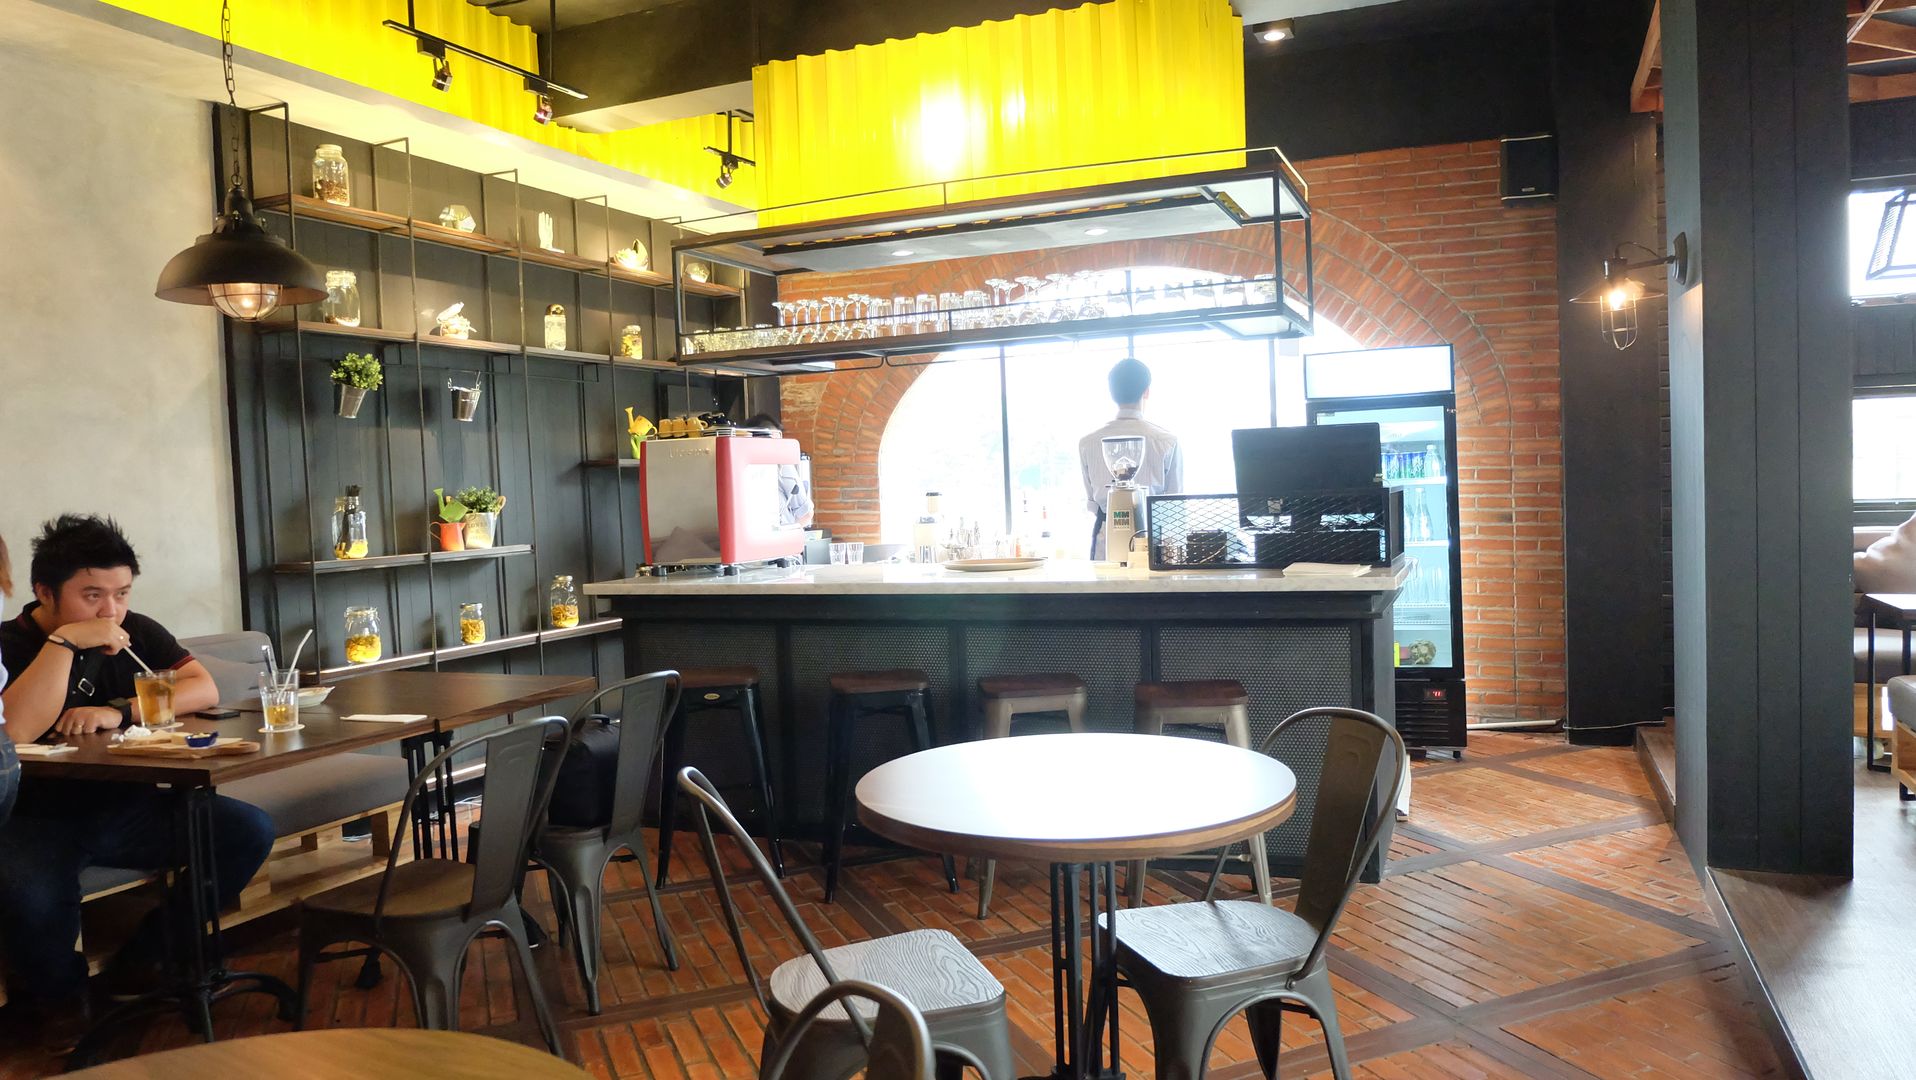 Cafe and Bar, Chromatic Interior Chromatic Interior Jardim interior Paisagismo de interior